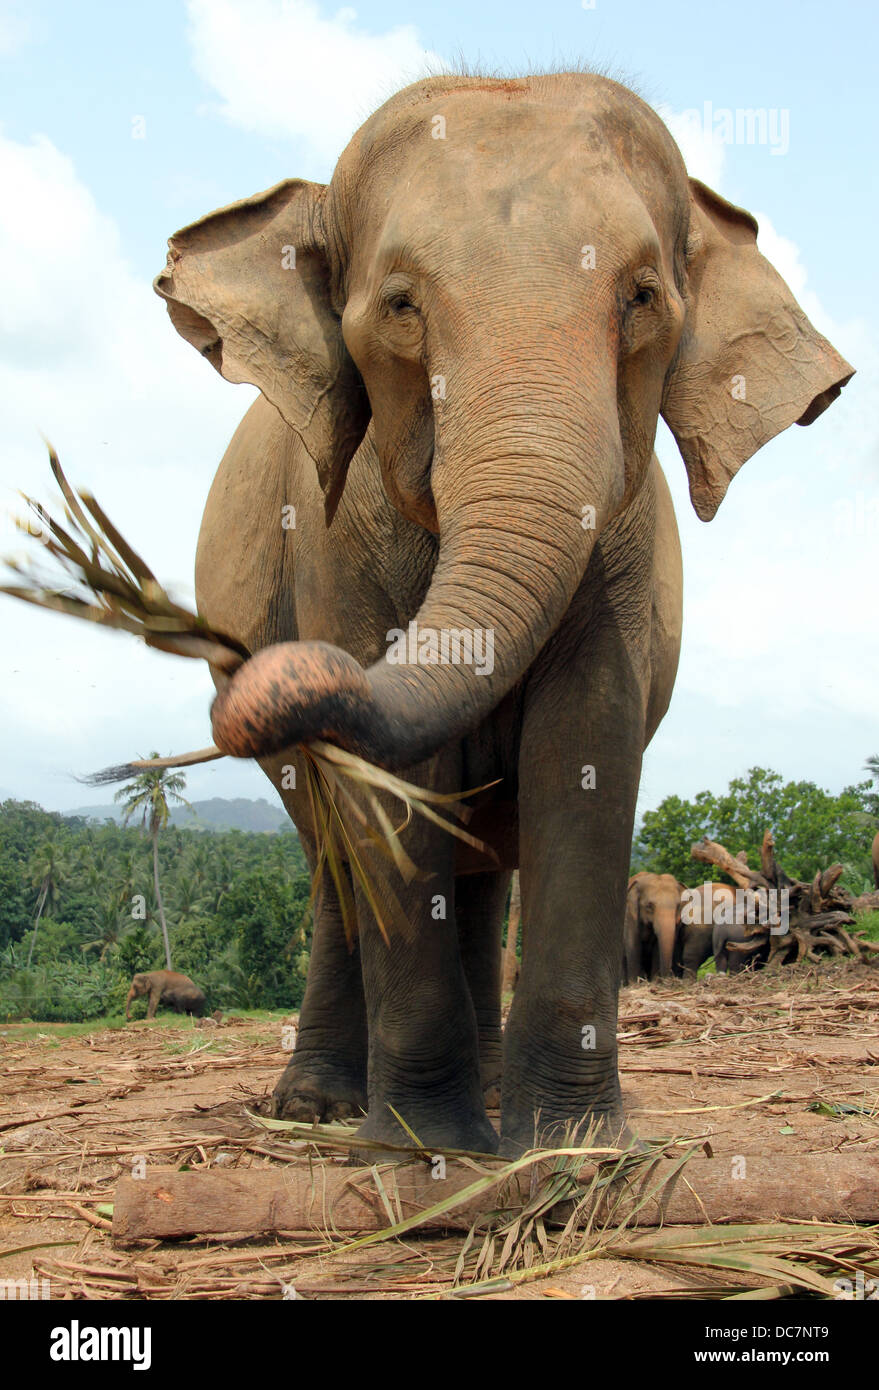 Lankesian Elephant (Elephas maximus Maximus) mangiando e guardando nella telecamera, girato dal di sotto, Pinnawela, Sri Lanka Foto Stock